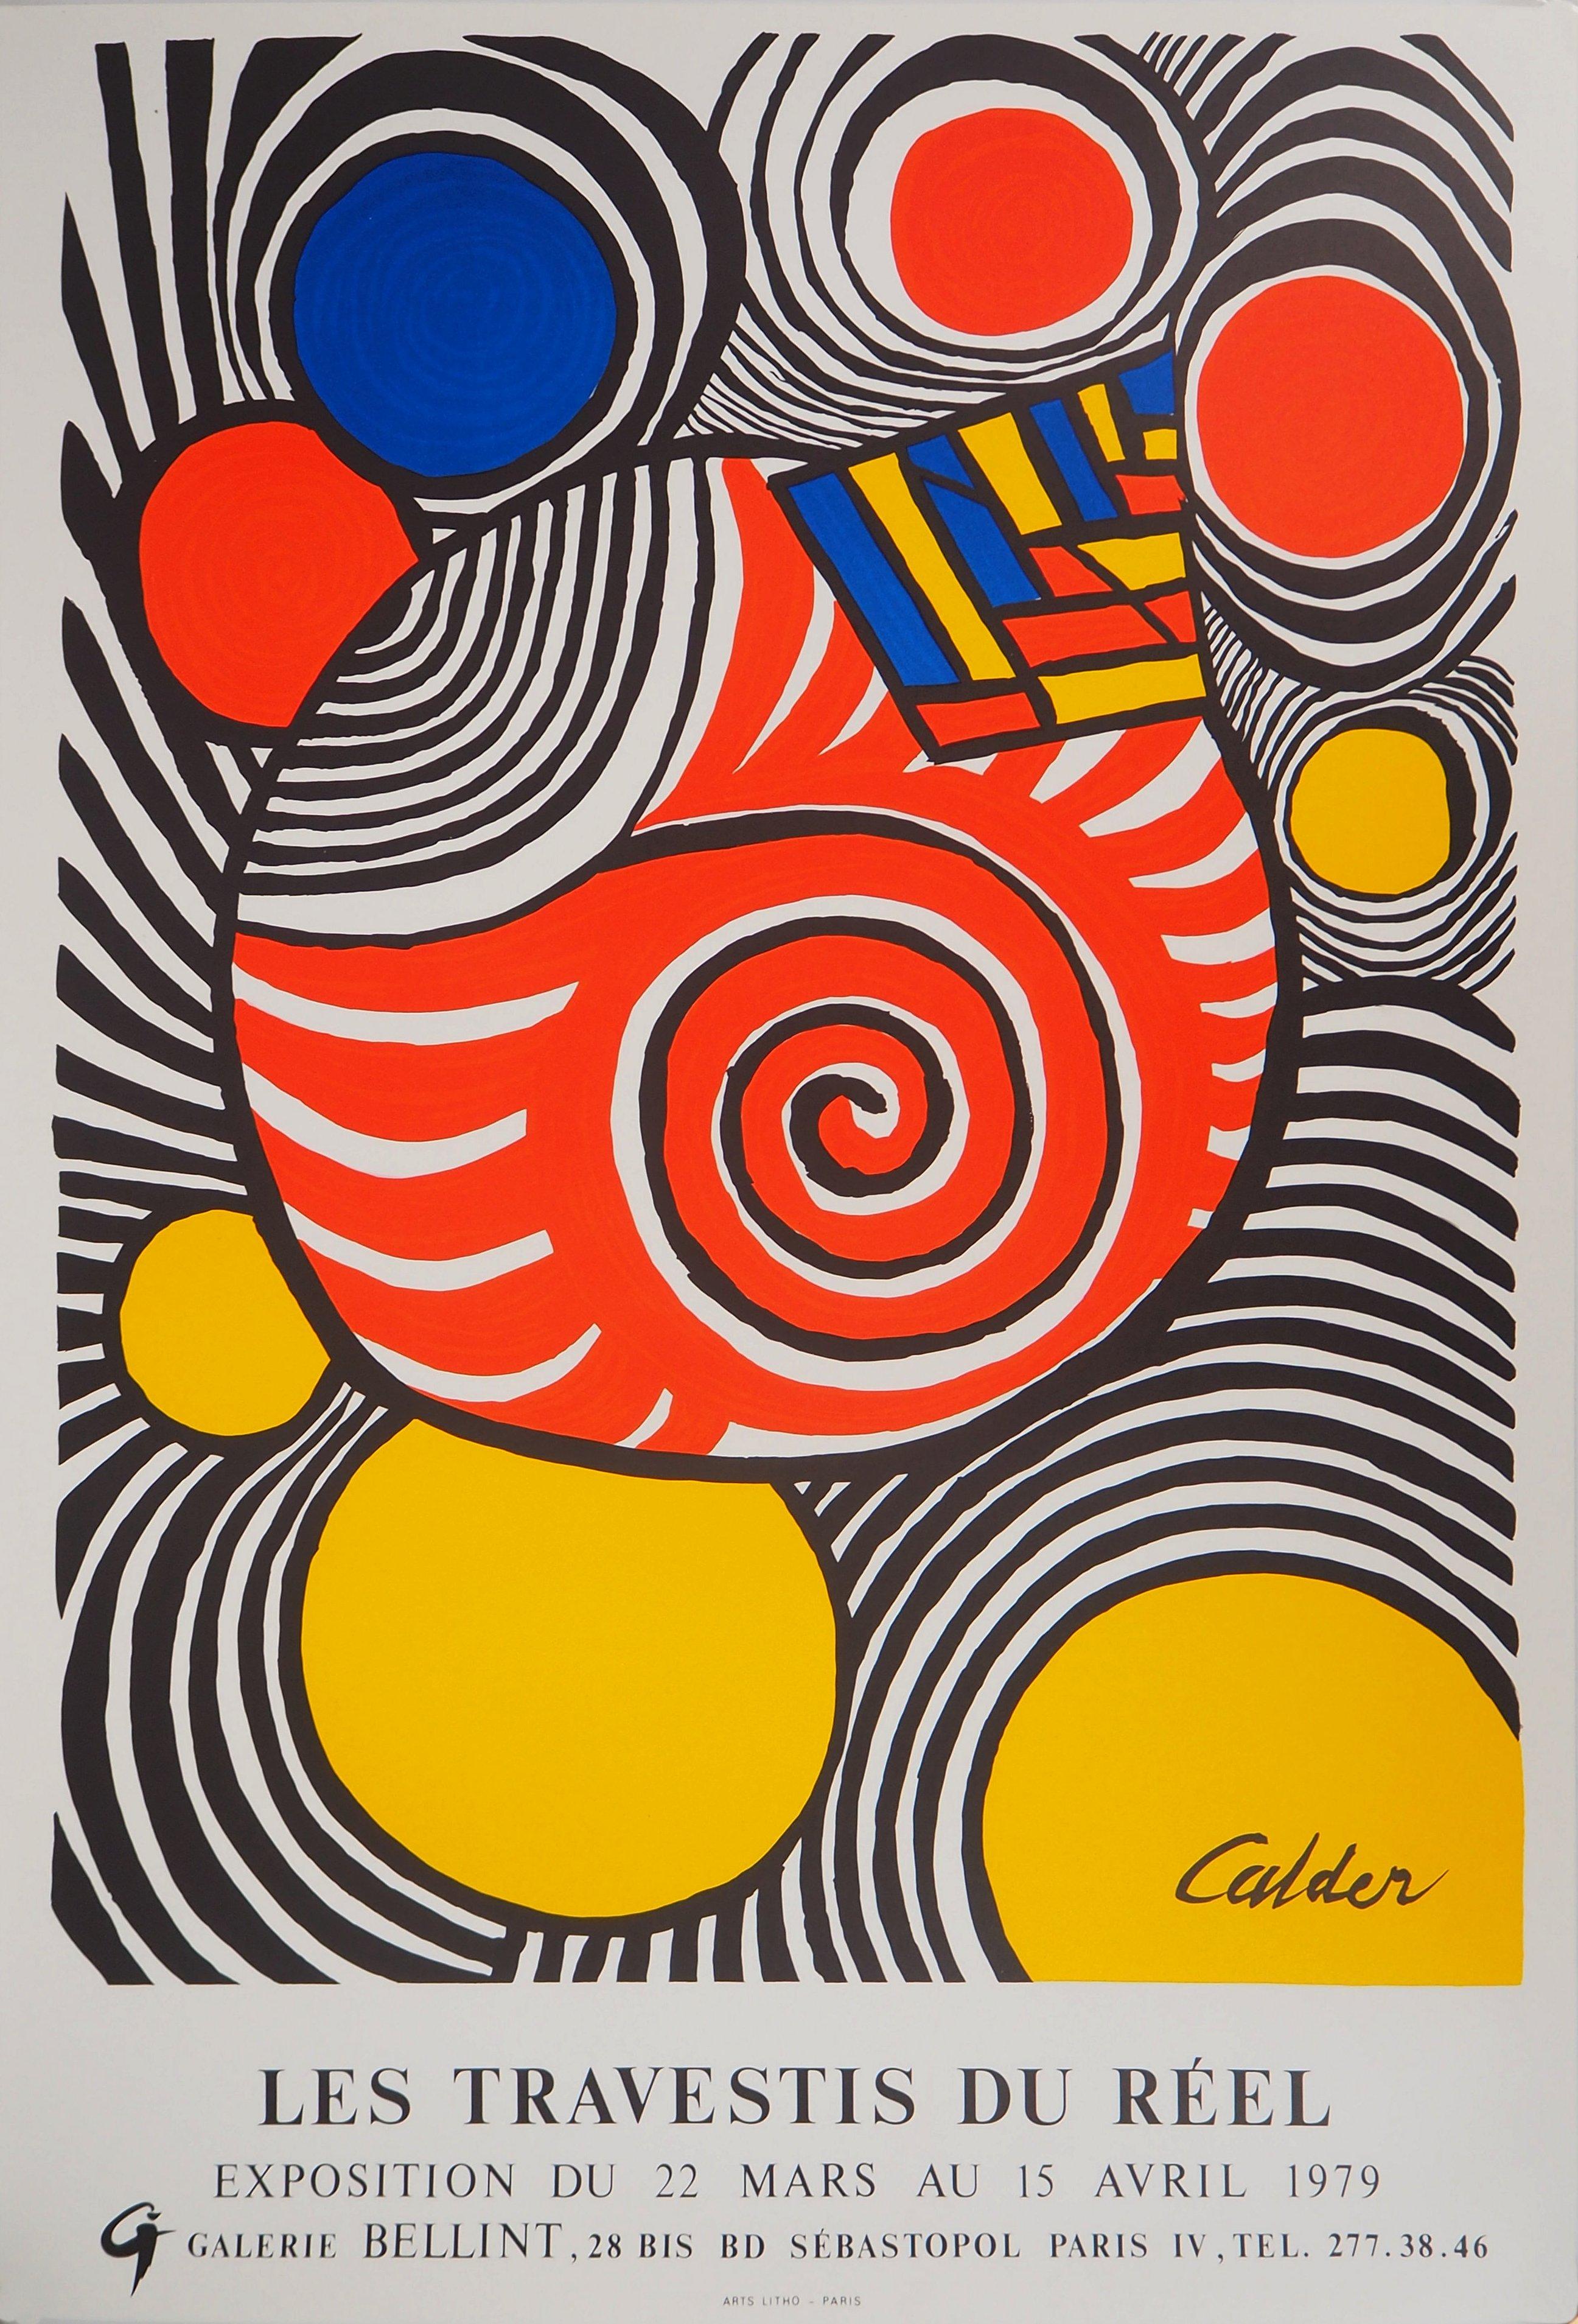 Alexander Calder Abstract Print - Les Travestis du Reel - Lithograph poster - 1979